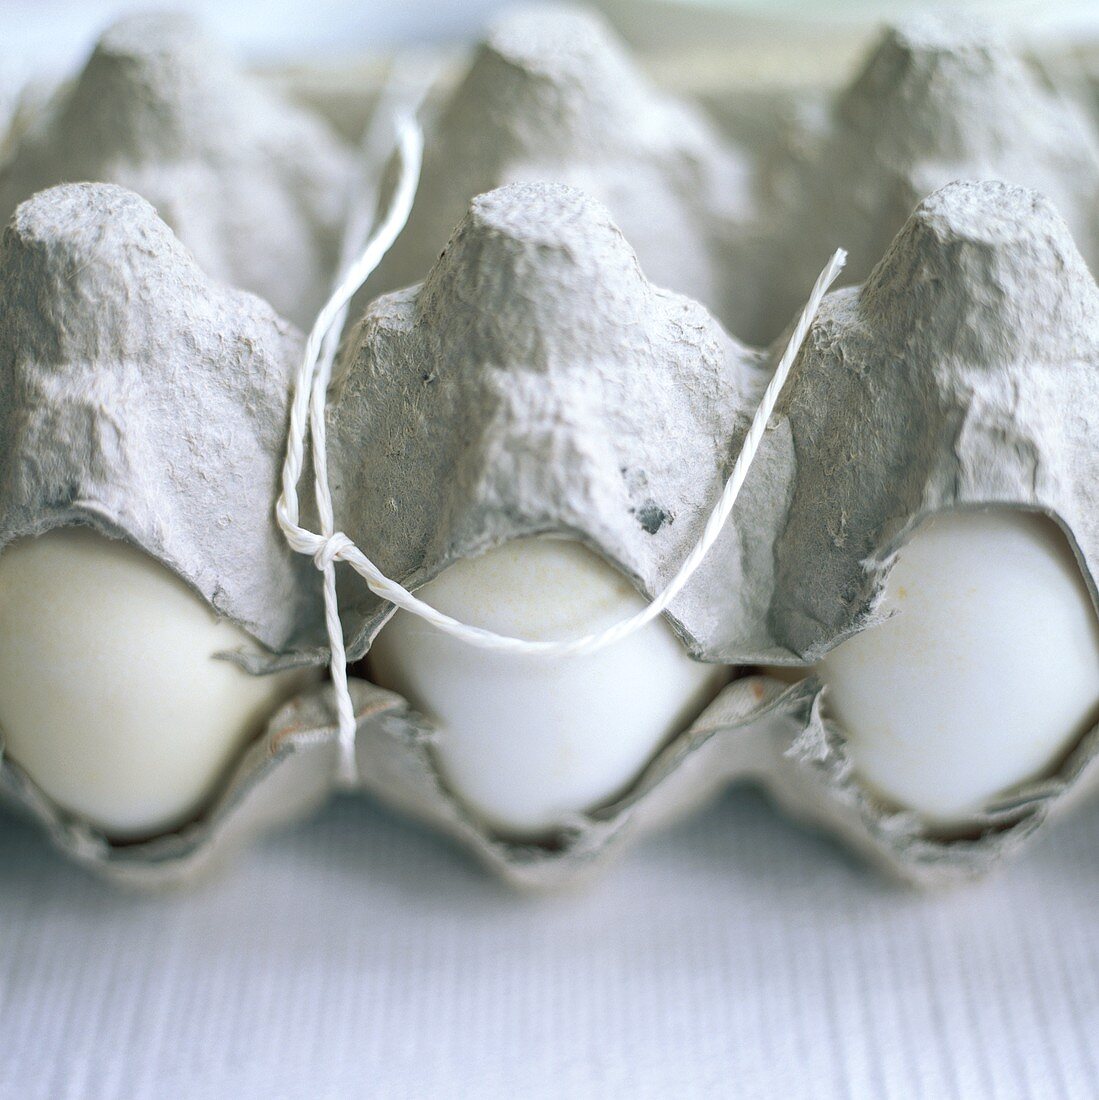 White Eggs in Carton